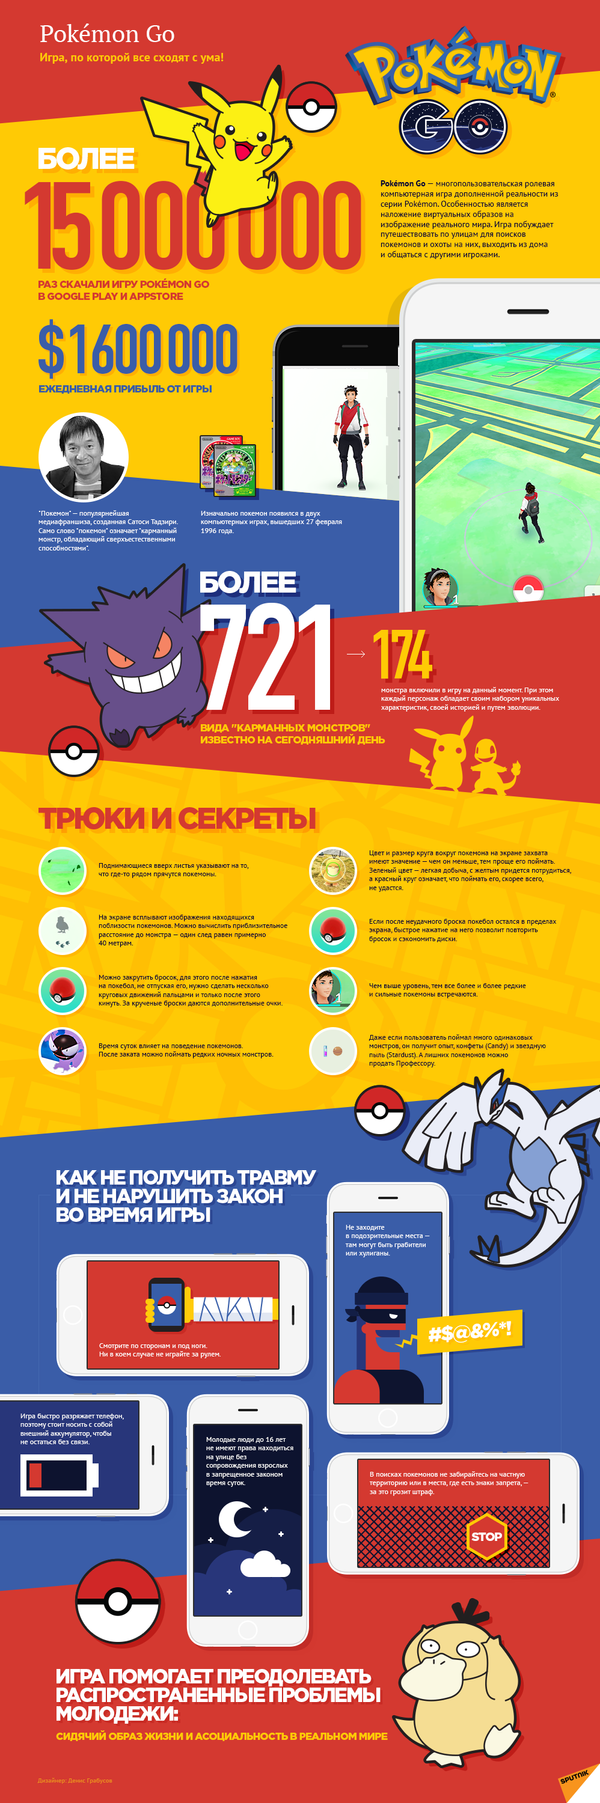 Pokemon Go: игра, по которой все сходят с ума - Sputnik Беларусь